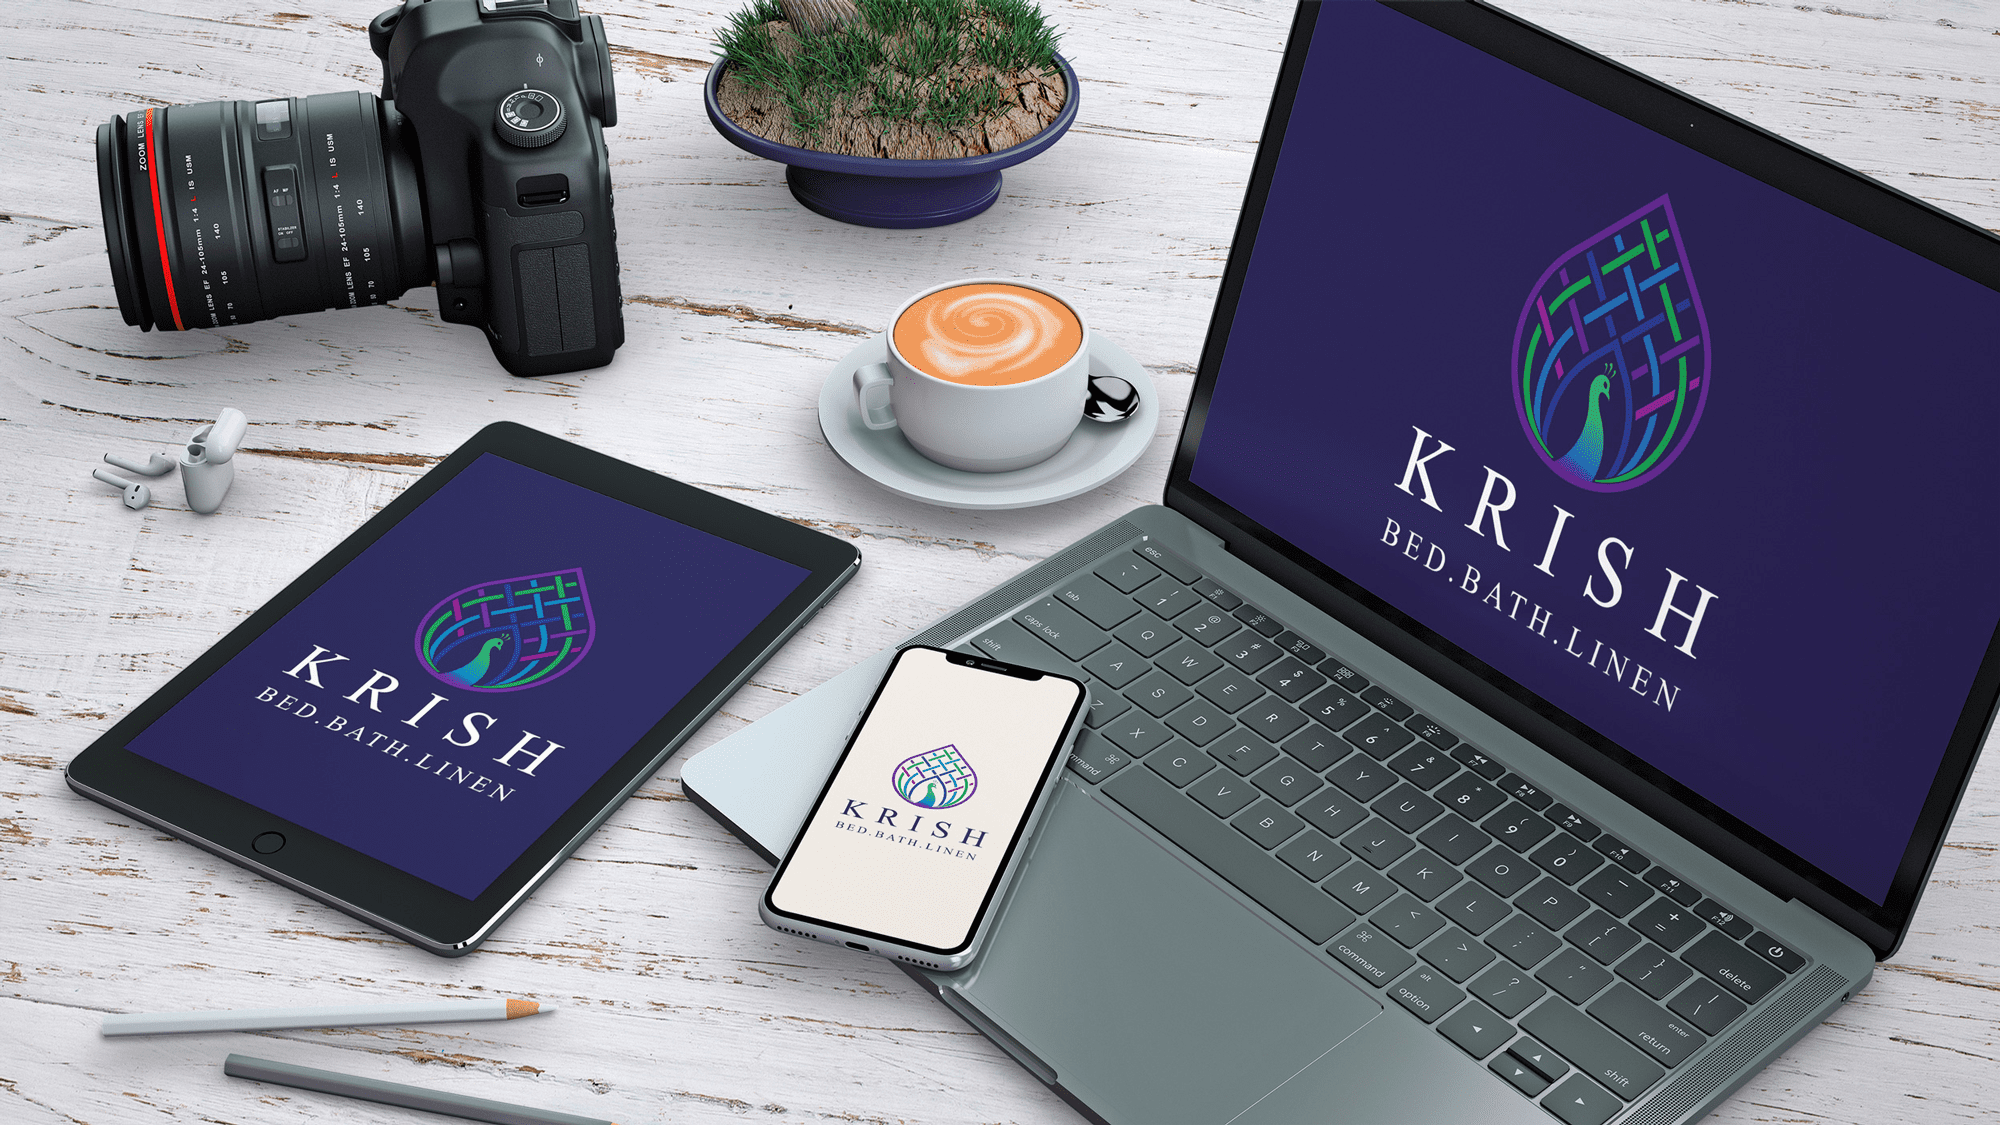 Krish Online Social Media MarketingGraphic Design, Branding Packaging Design in Erode by Creative Prints thecreativeprints